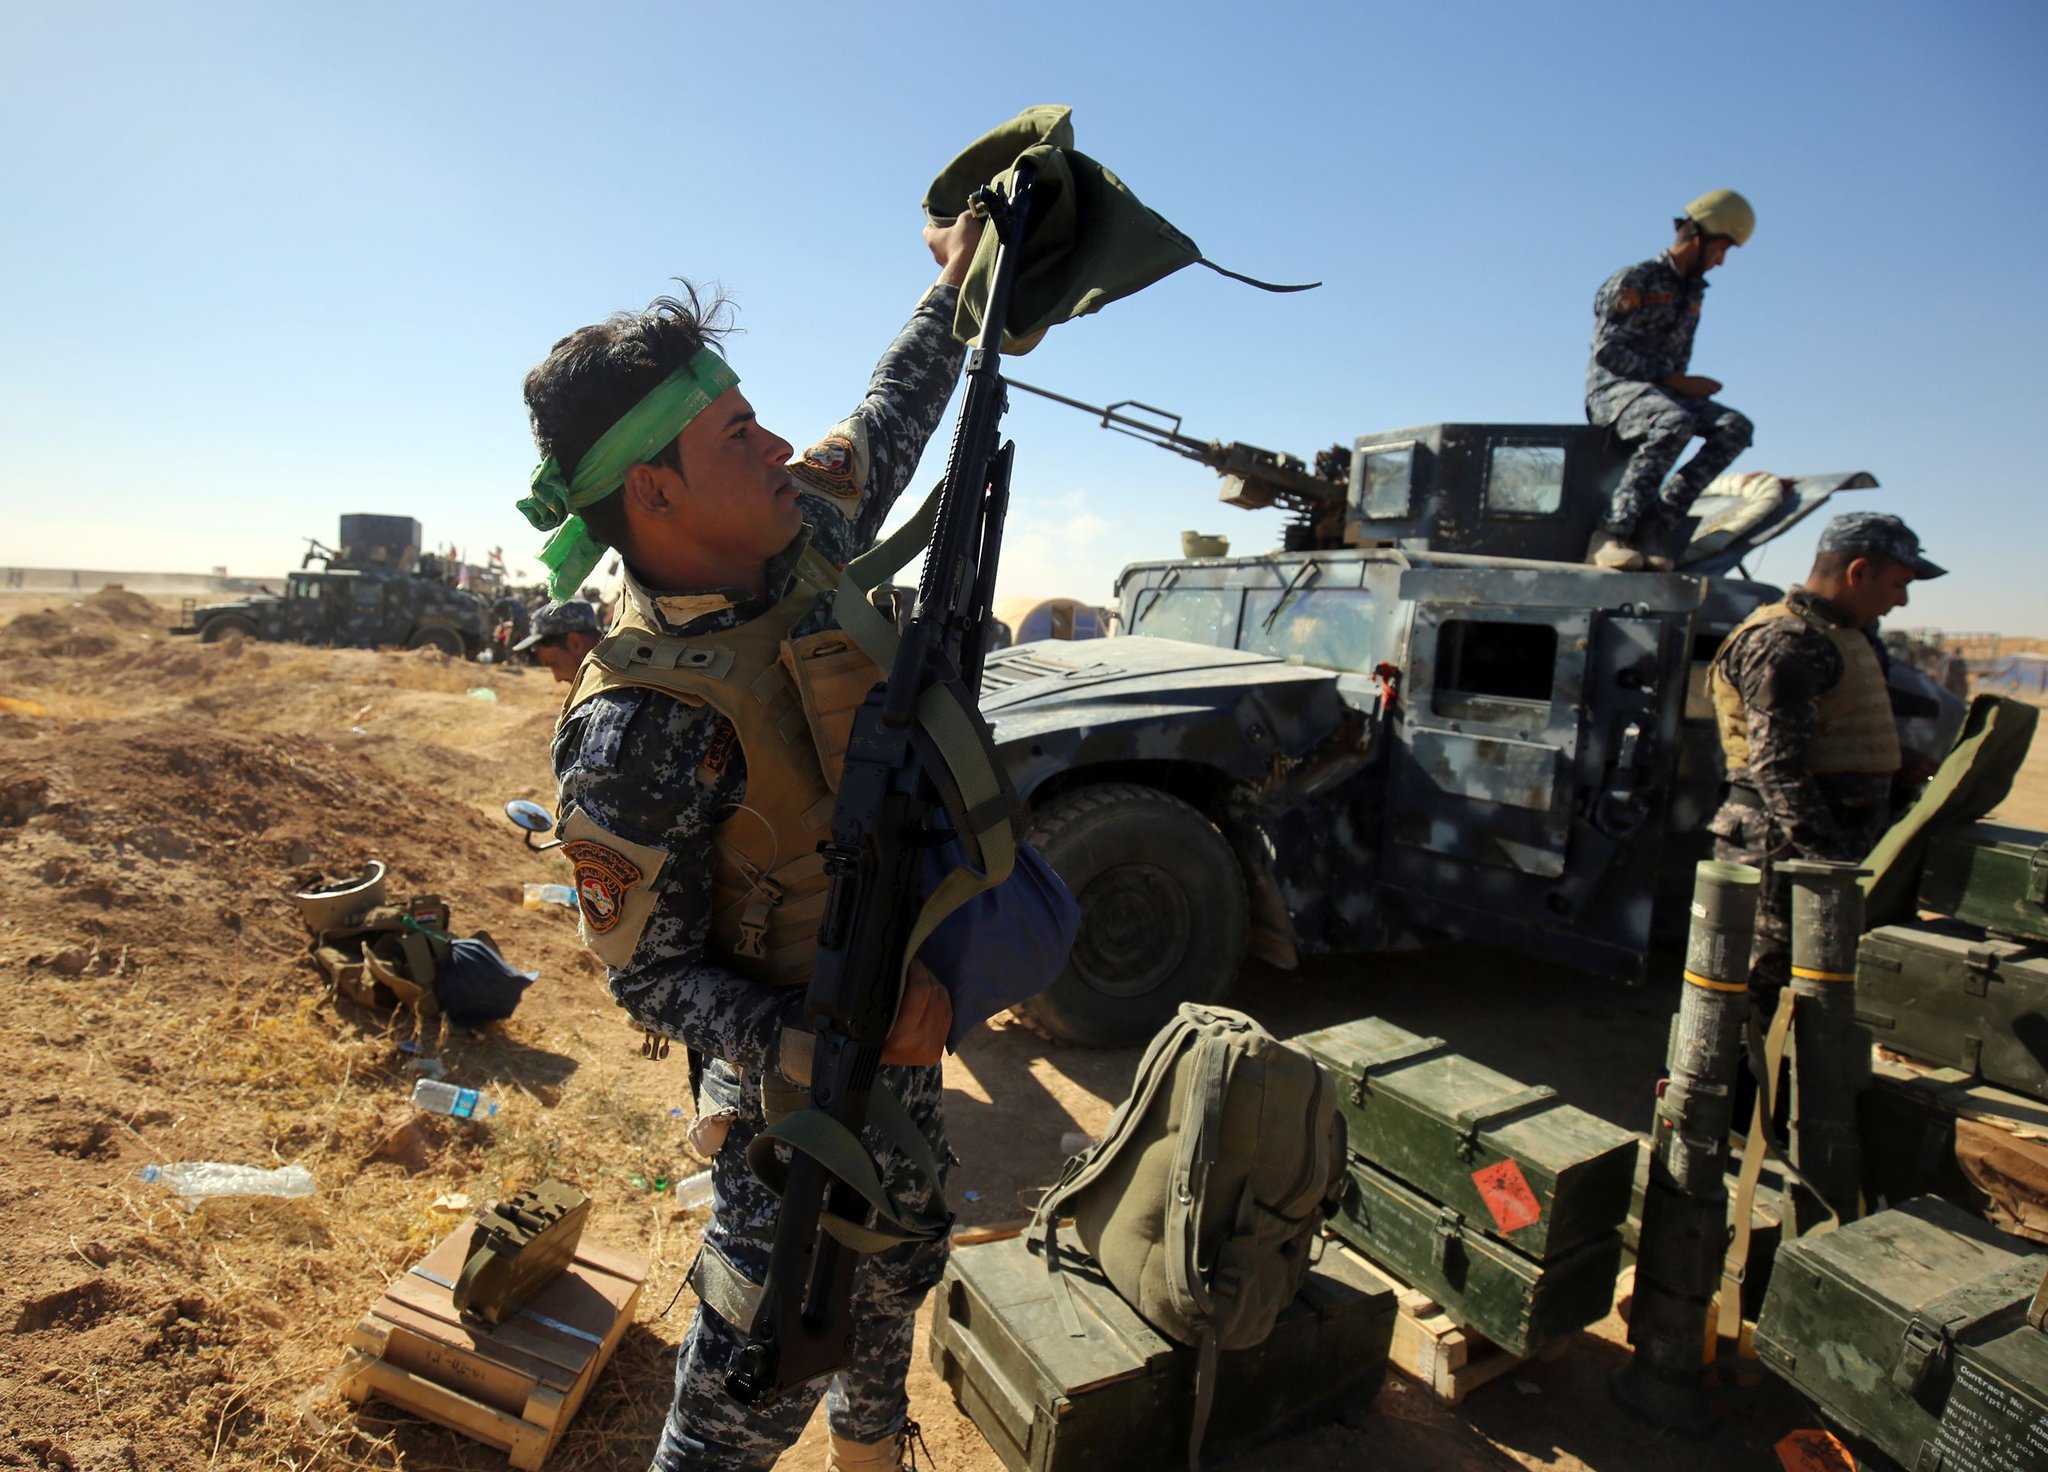 Iranian militias staging renewed attacks in Iraq